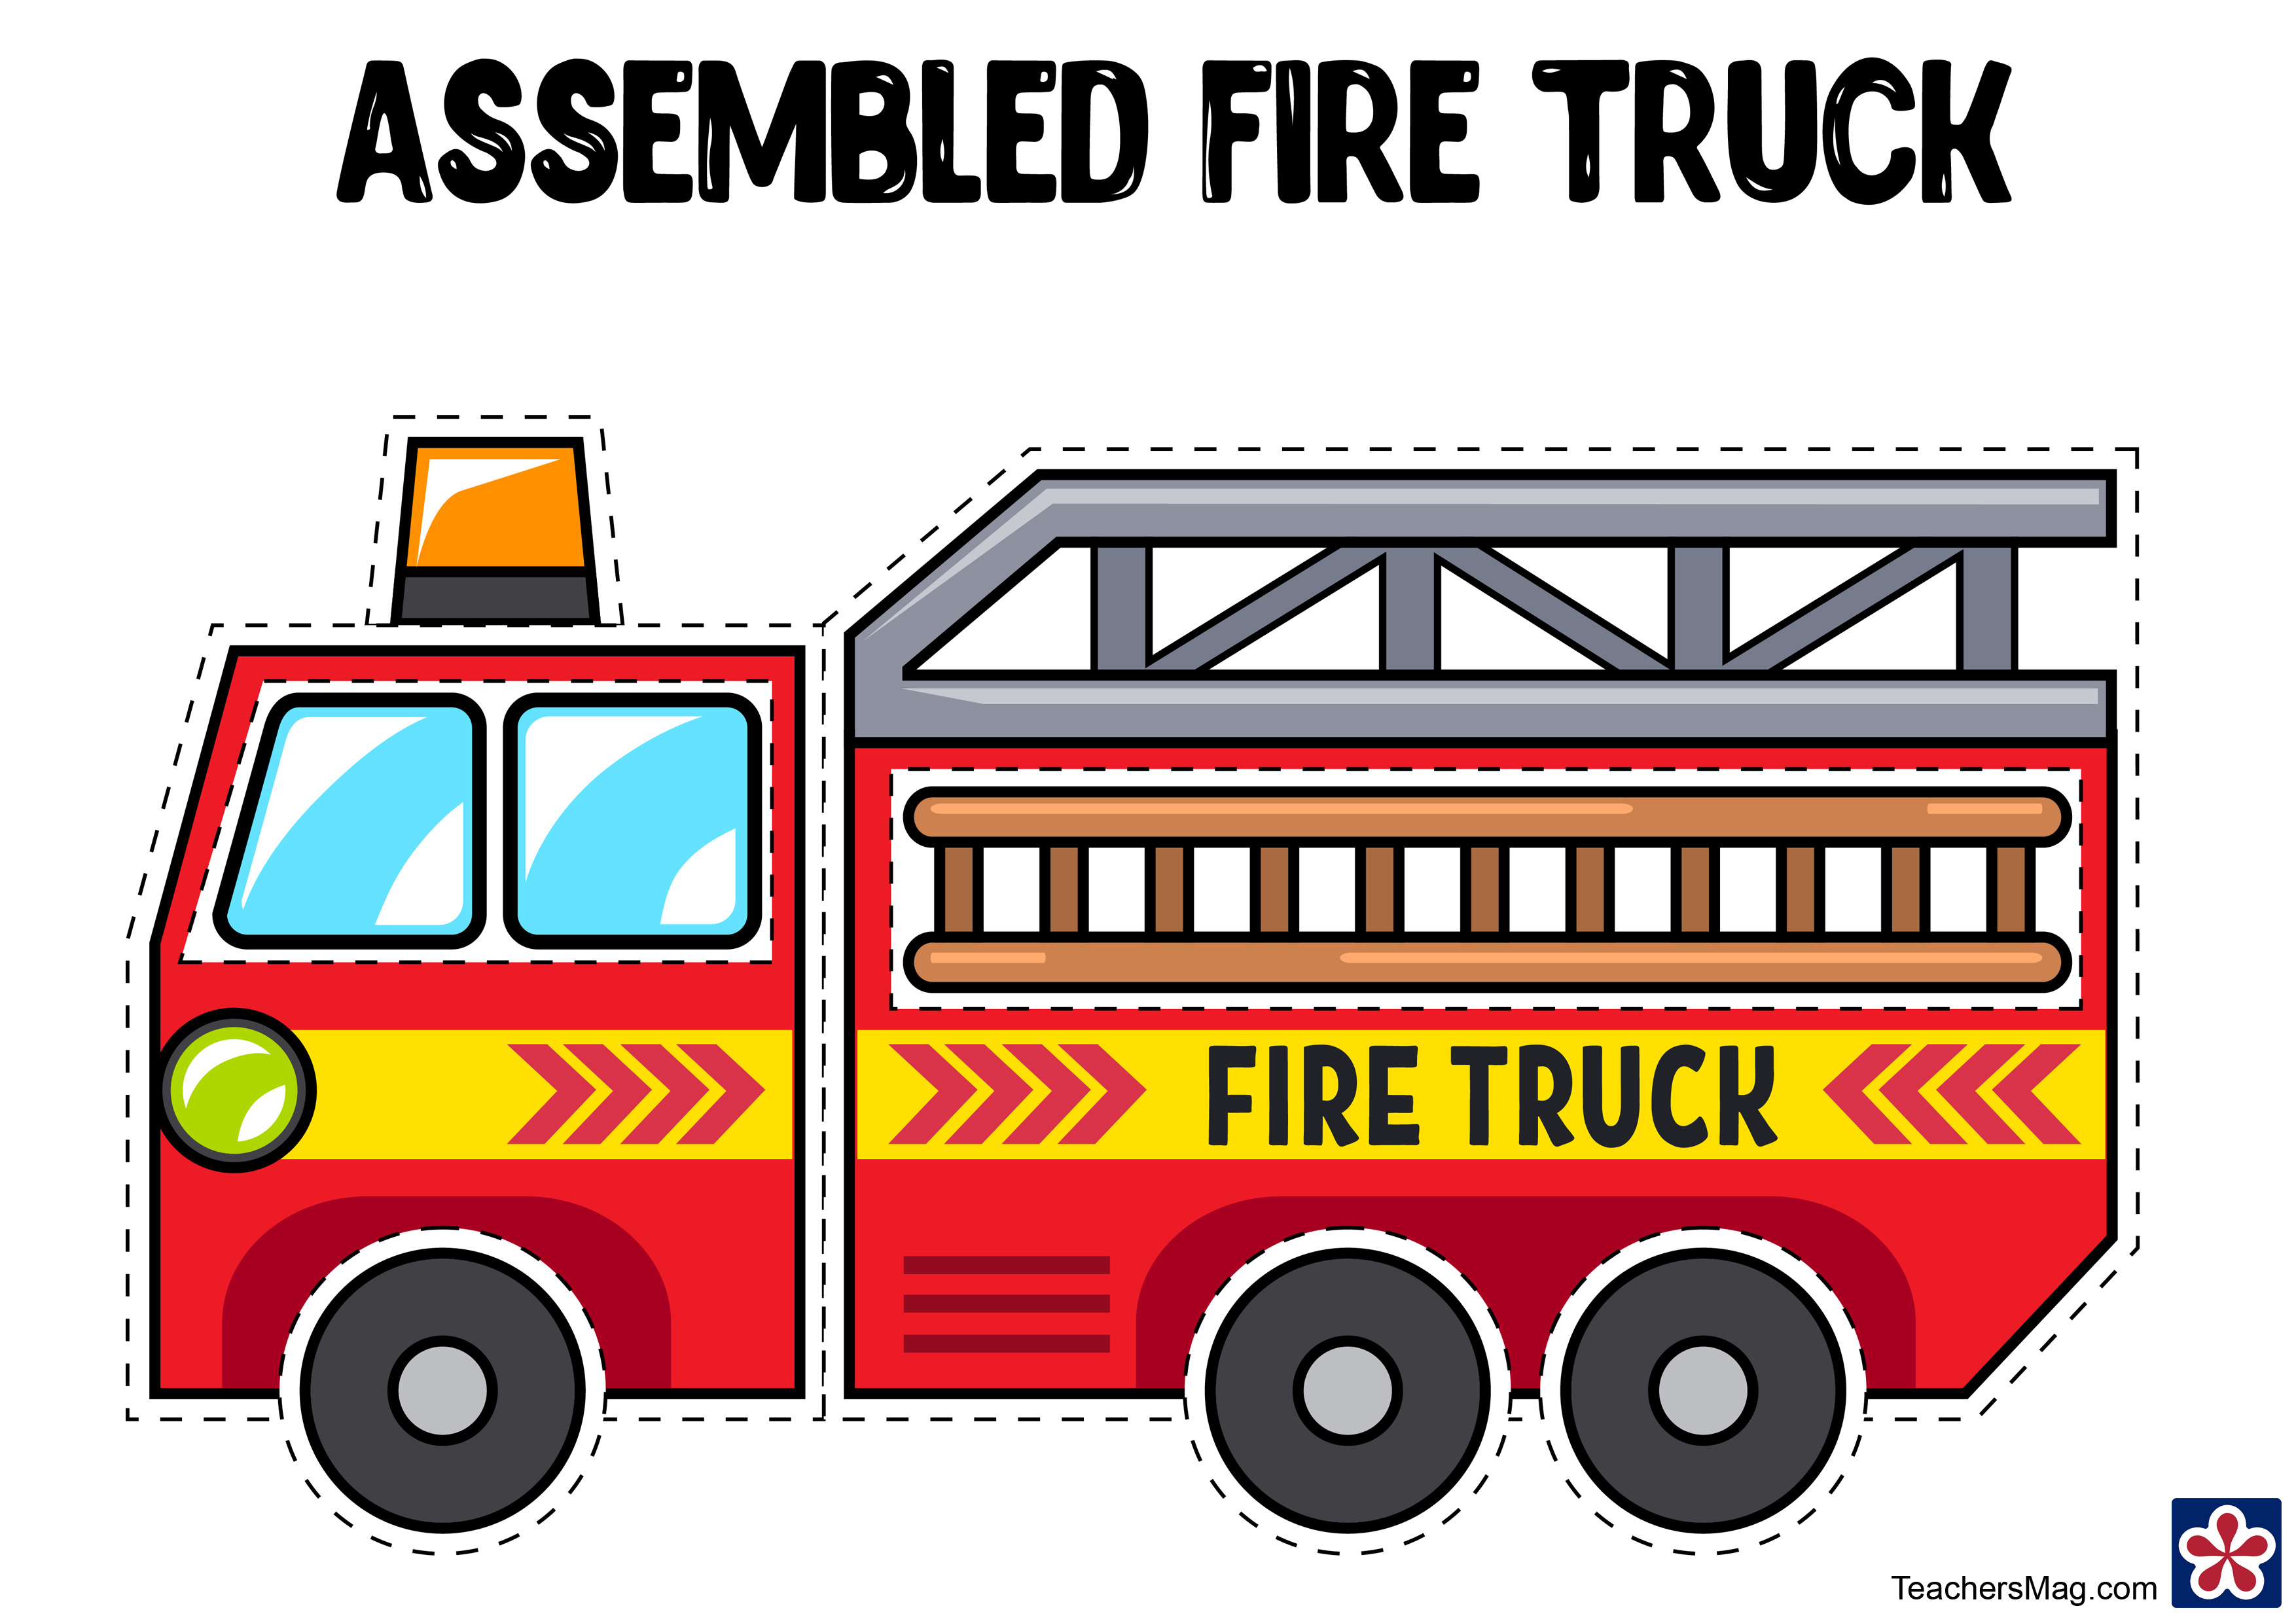 Free Firefighter Worksheets